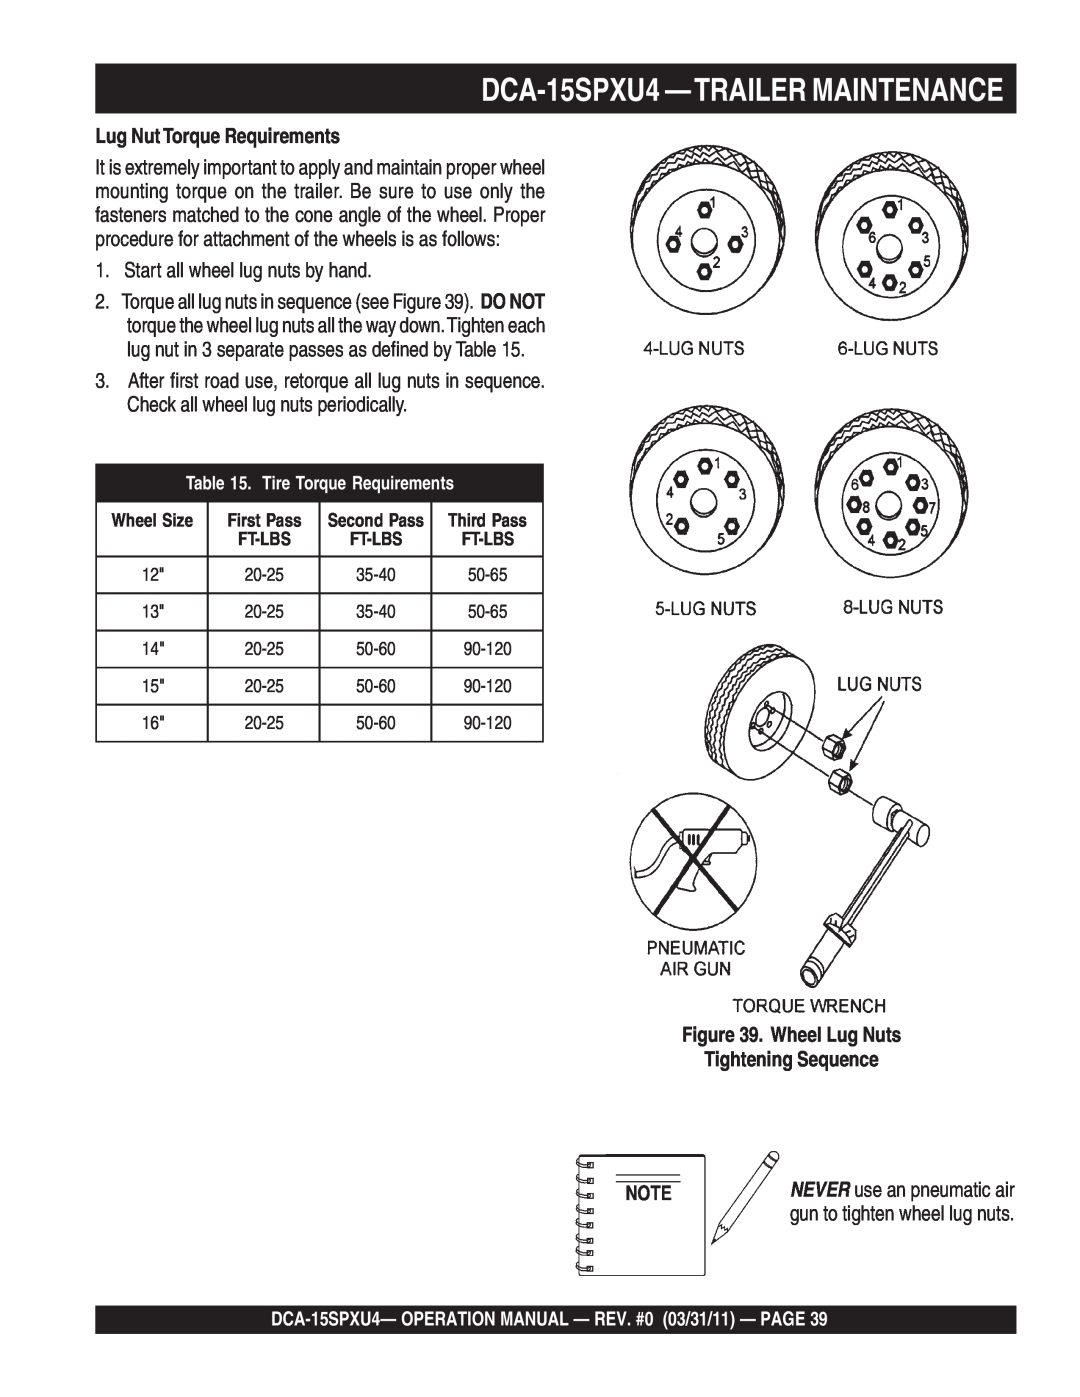 Multiquip DCA-15SPXU4 -TRAILERMAINTENANCE, Lug Nut Torque Requirements, Wheel Lug Nuts Tightening Sequence, First Pass 